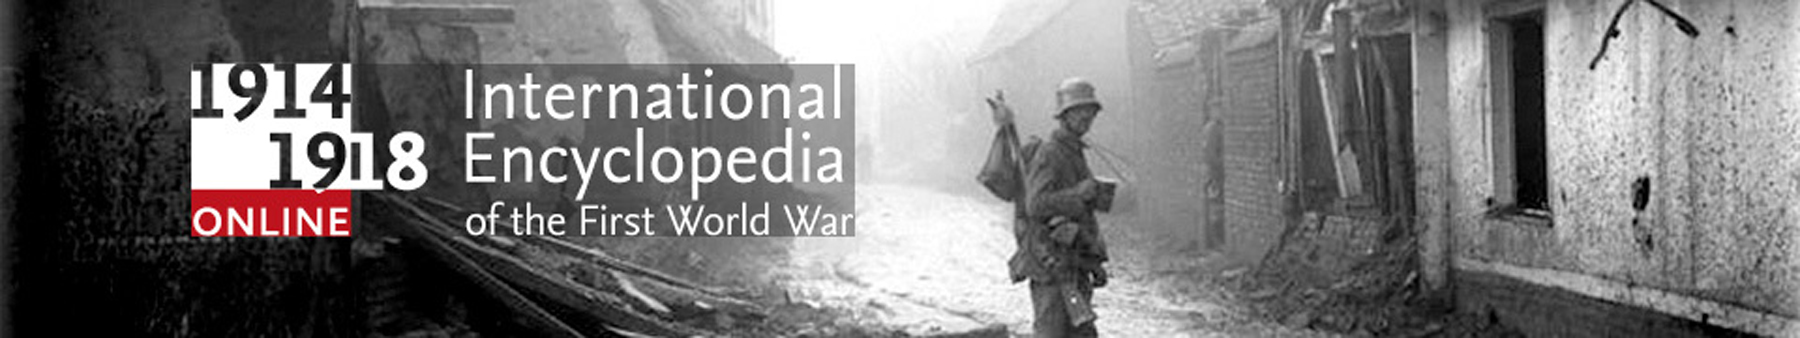 La “Grande Guerra” e le enciclopedie: Wikipedia e 1914-1918-online